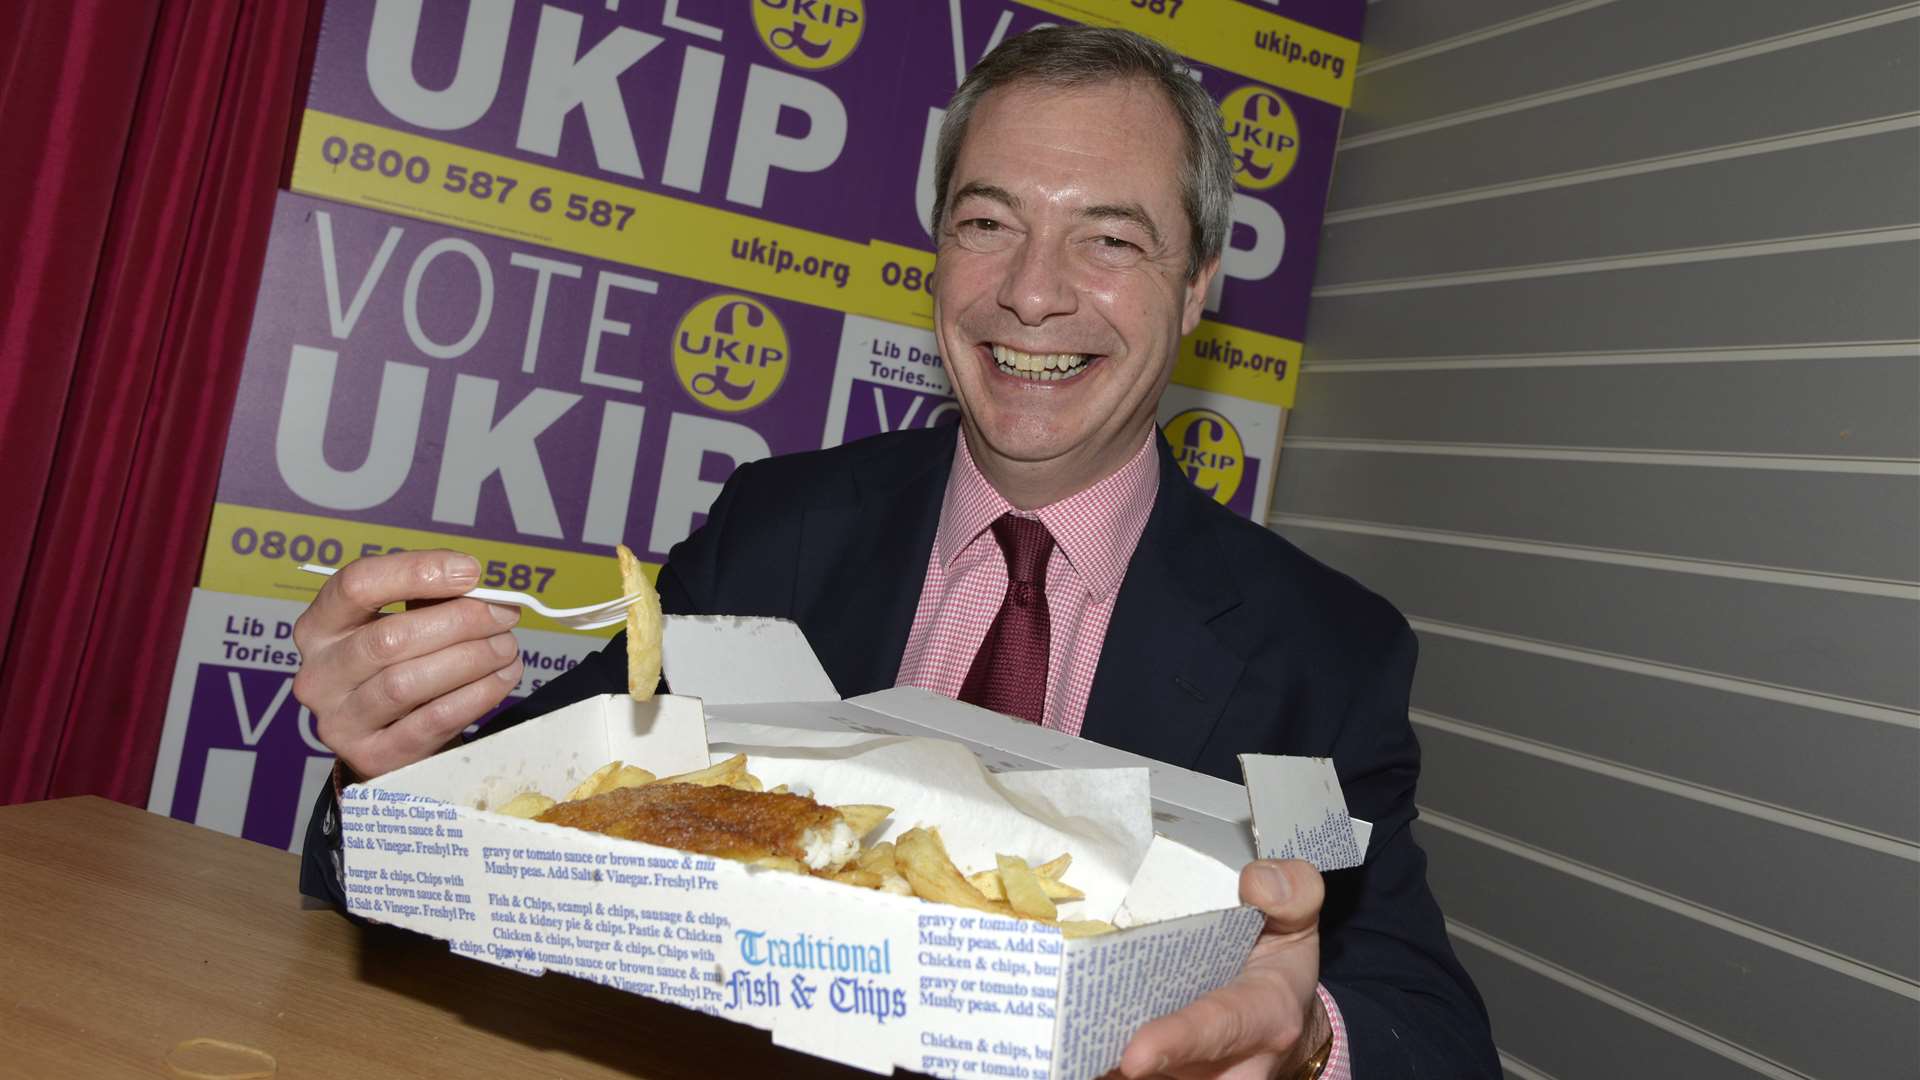 Ukip leader Nigel Farage enjoying fish and chips for lunch